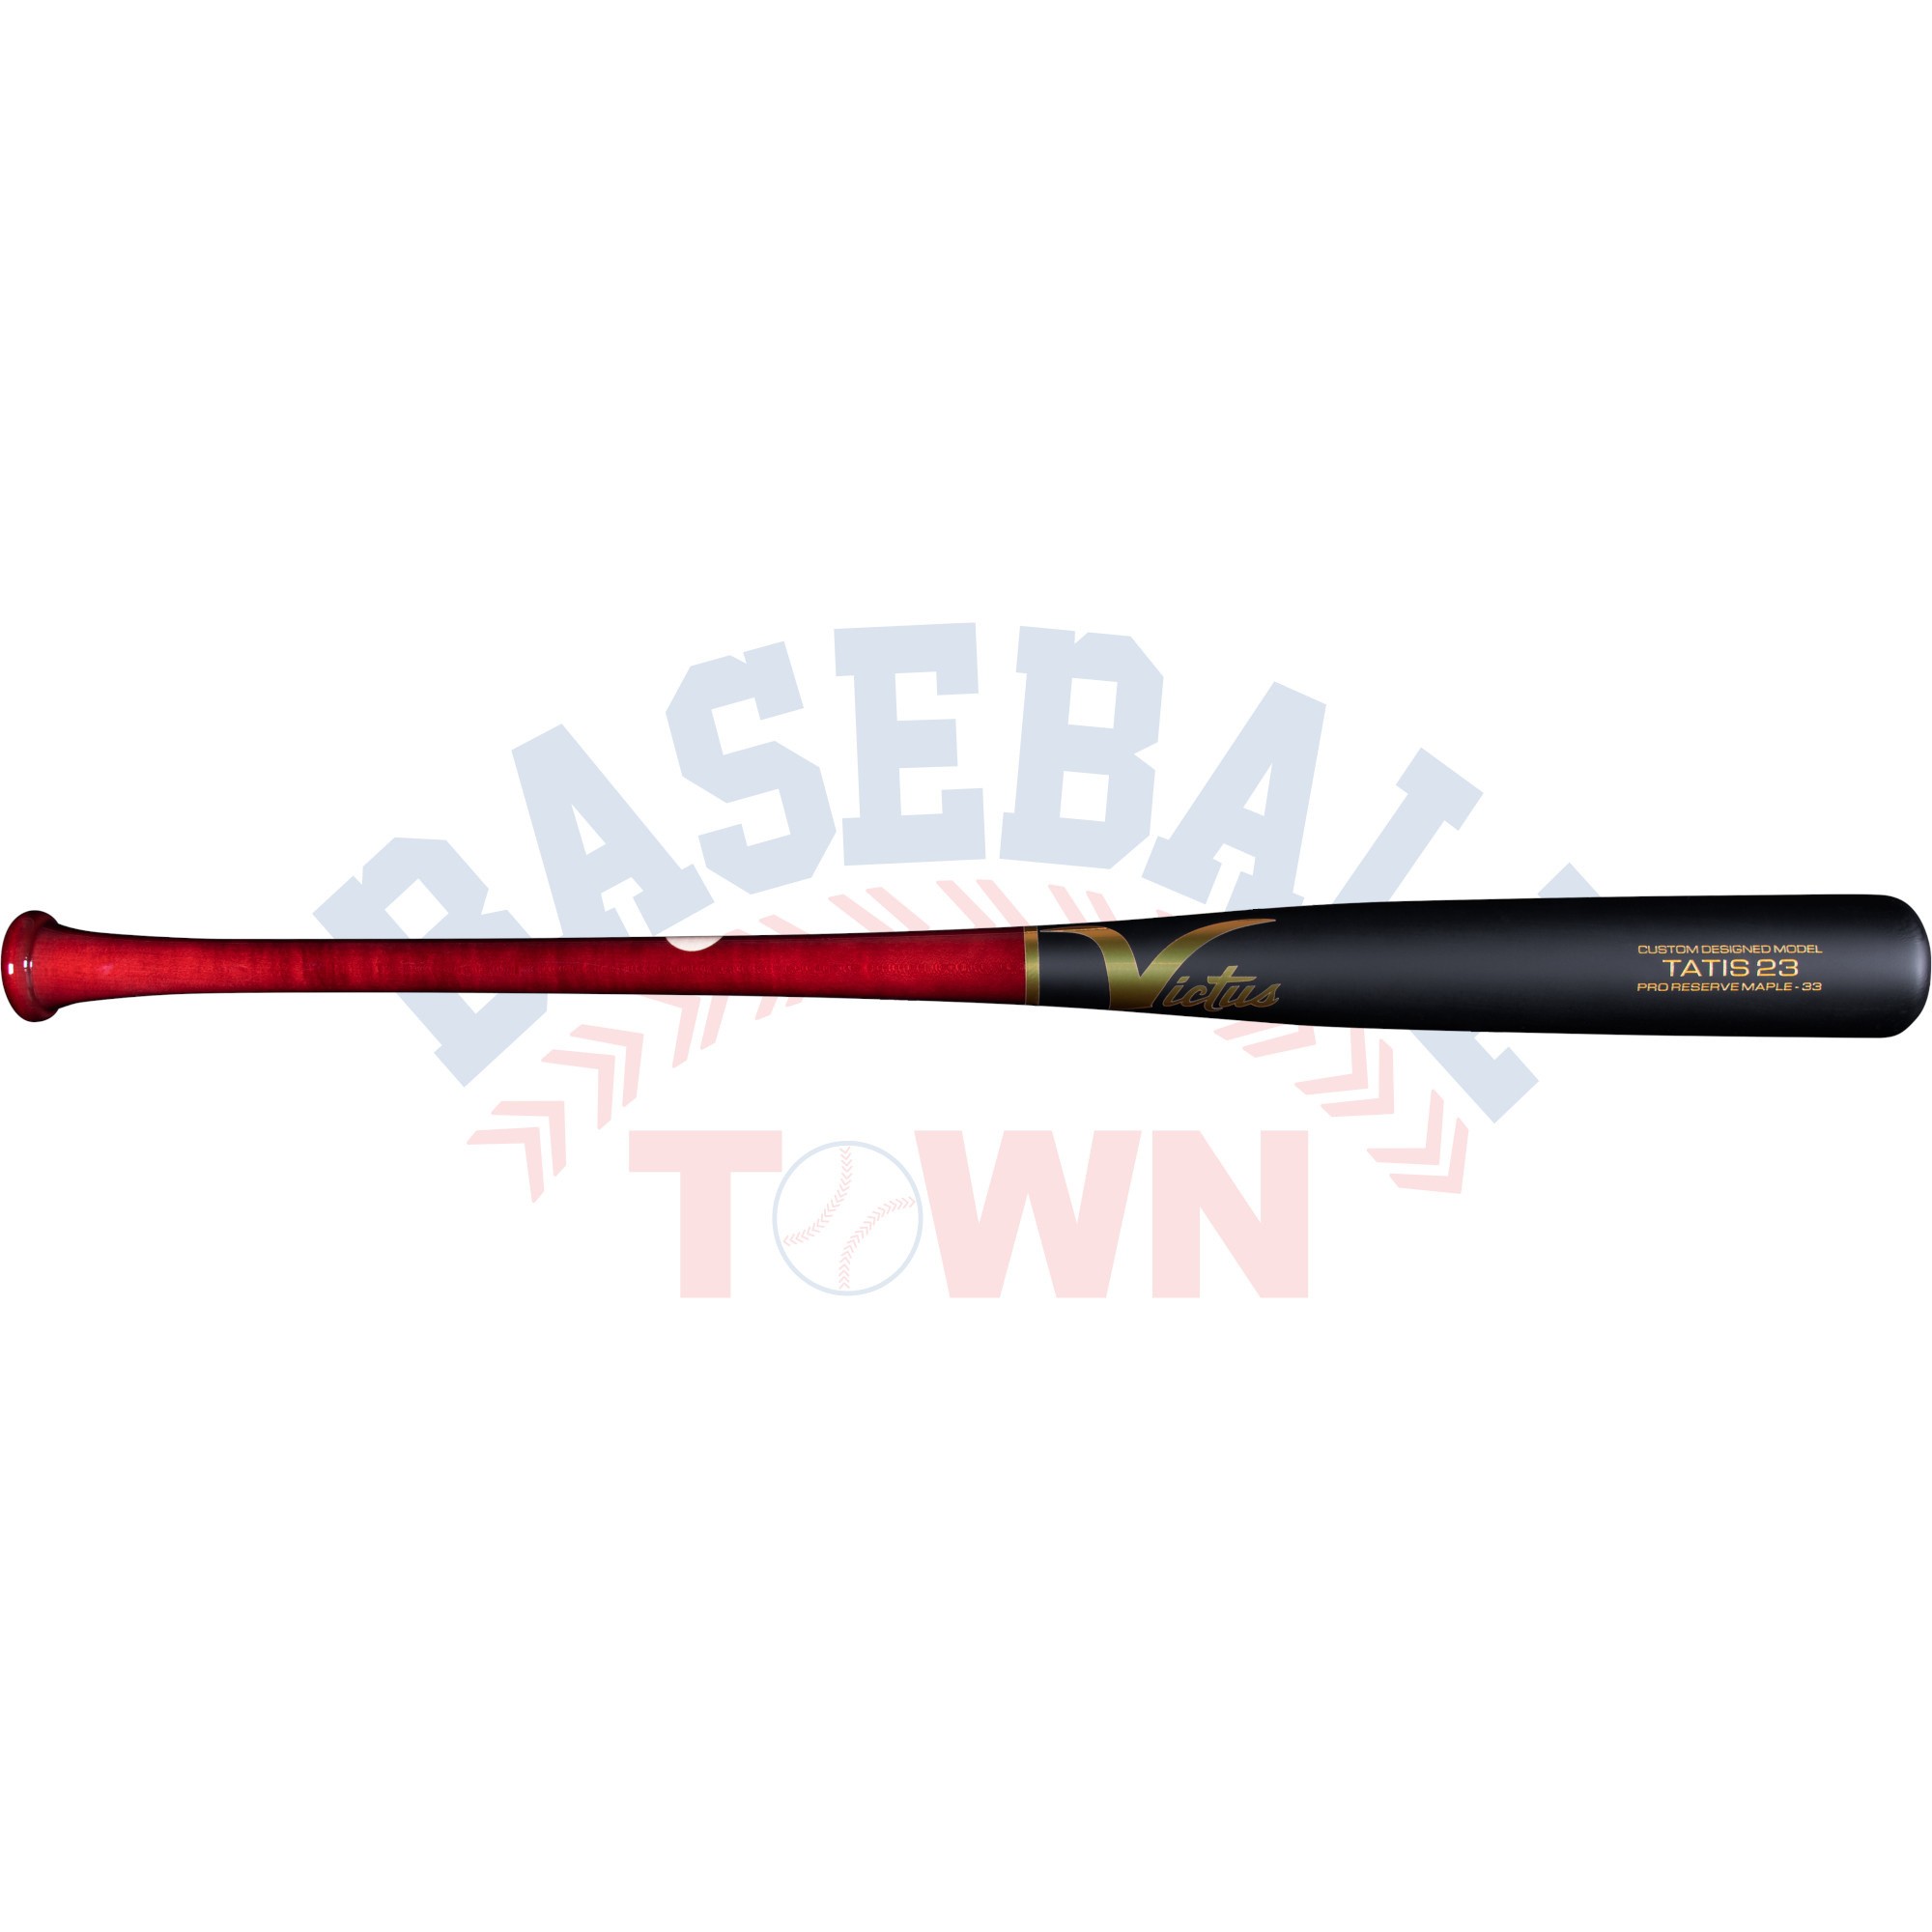 Maple Baseball Bats Blems-ND243 & Pro-Tomahawk Models